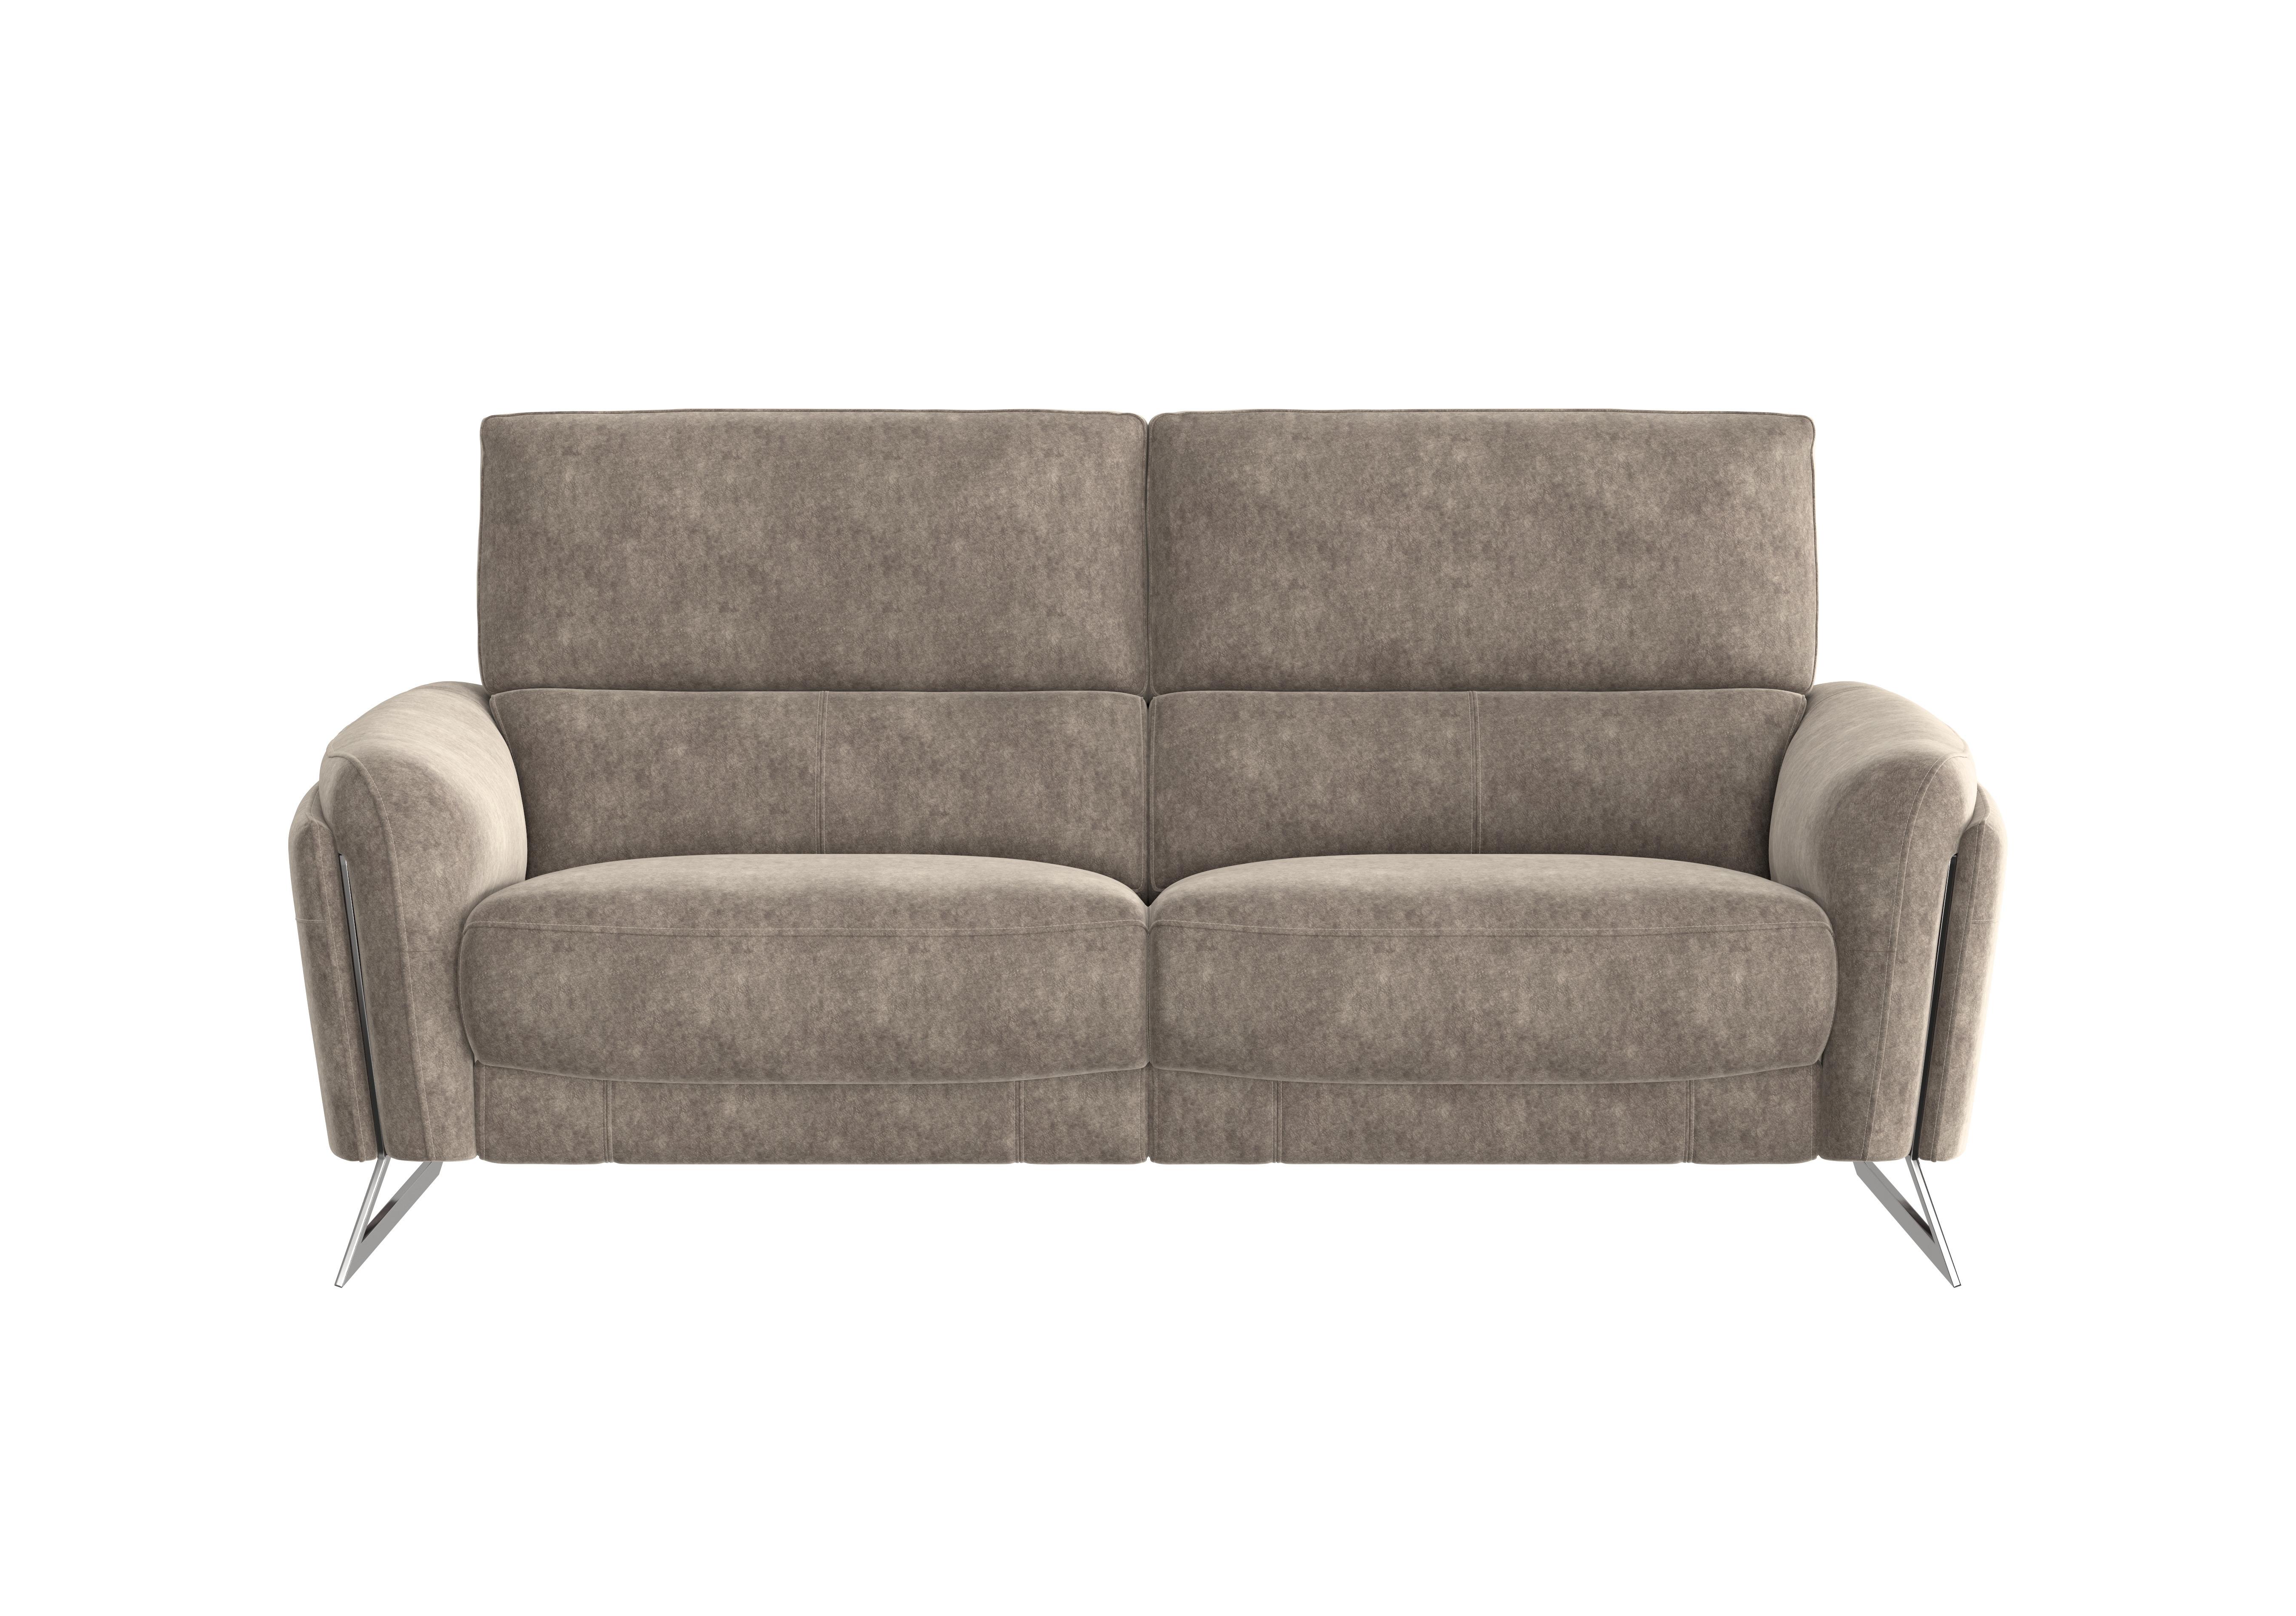 Amarilla 3 Seater Fabric Sofa in Bfa-Bnn-R29 Mink on Furniture Village